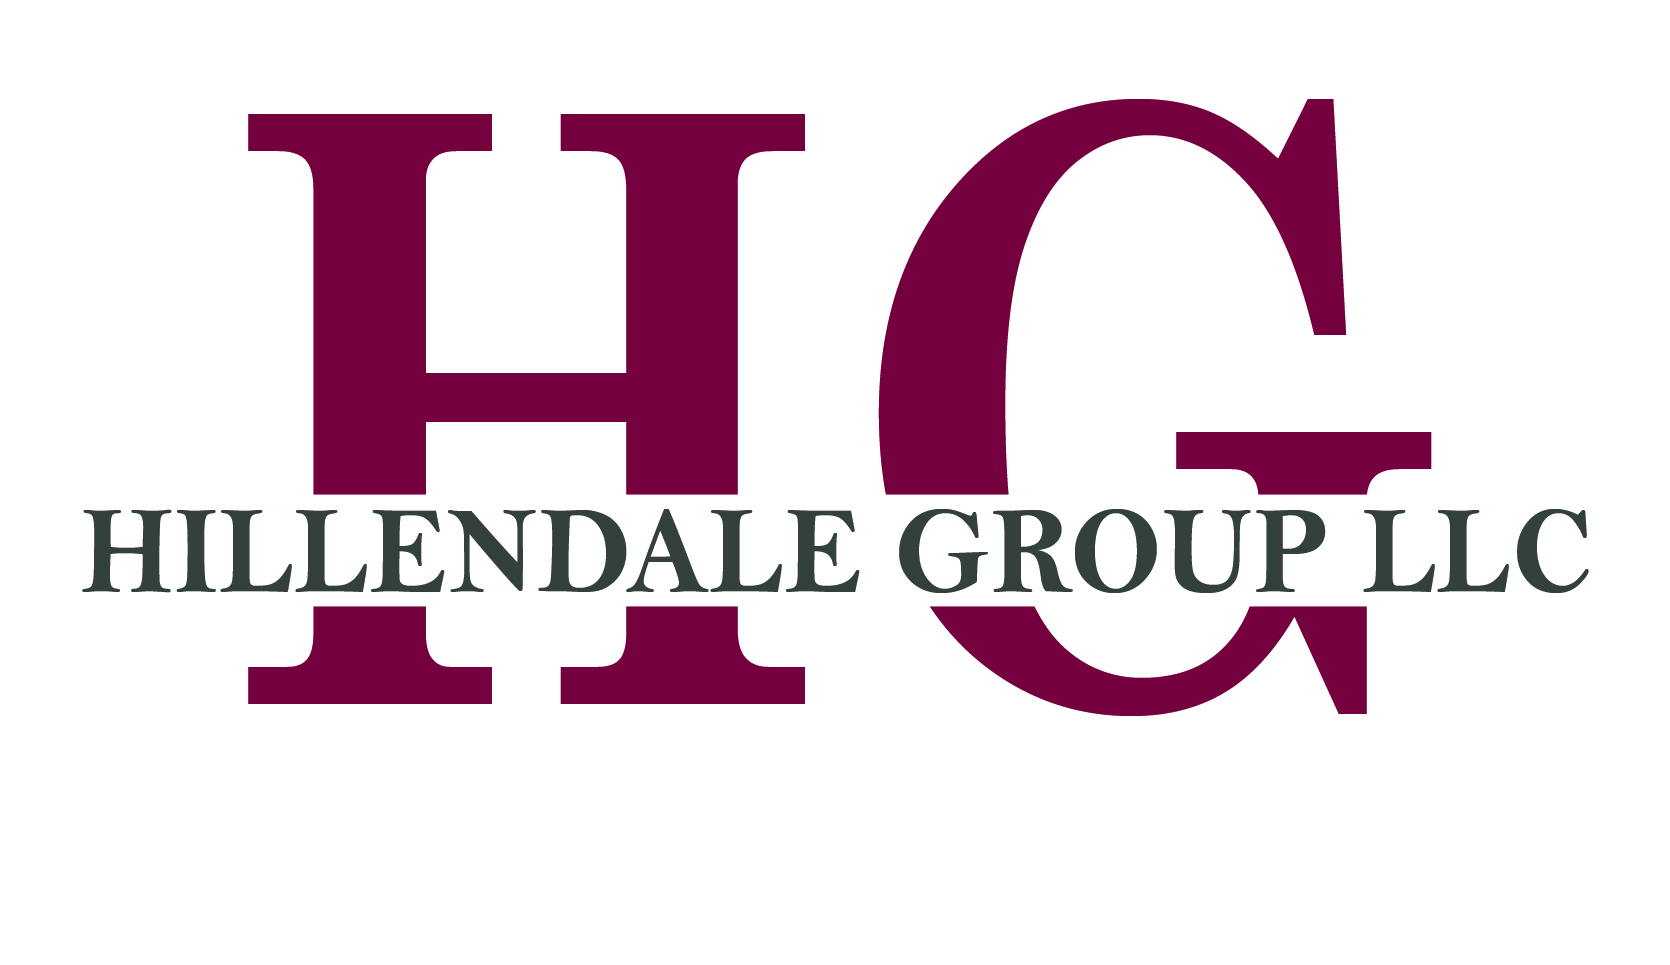 Hillendale Group LLC